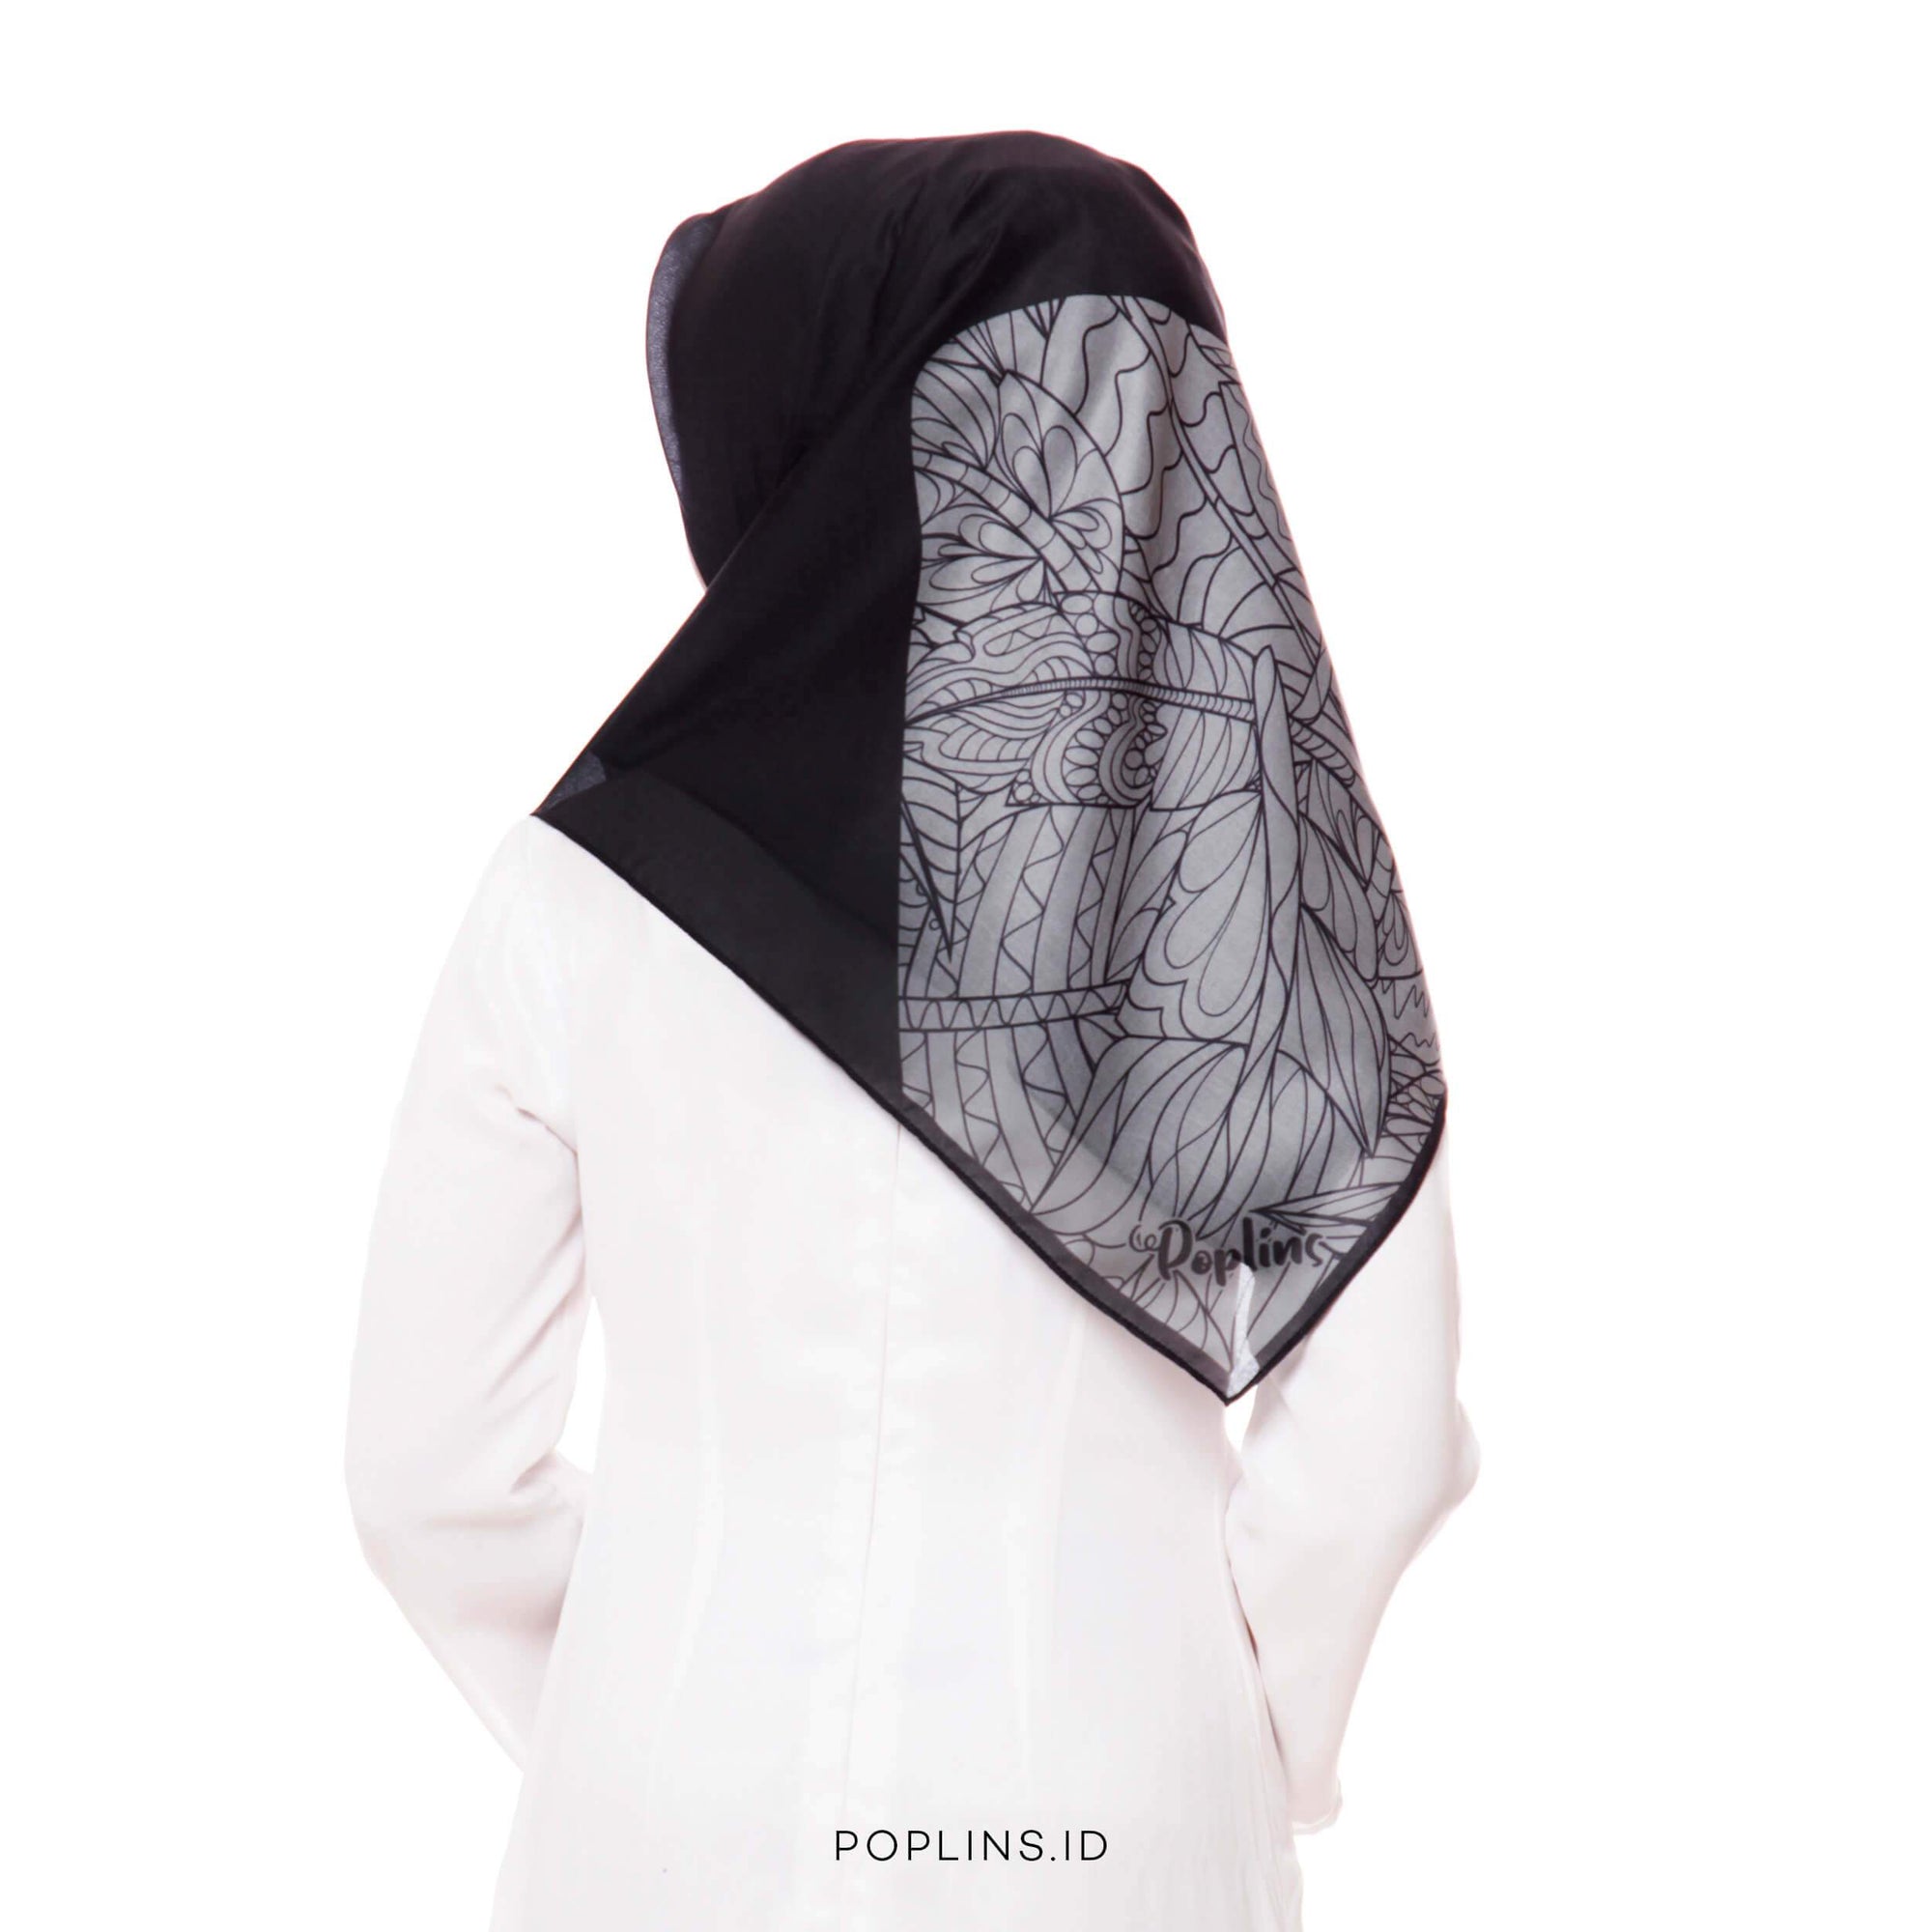 Poplins Wening - Beautiful Hijab Styles